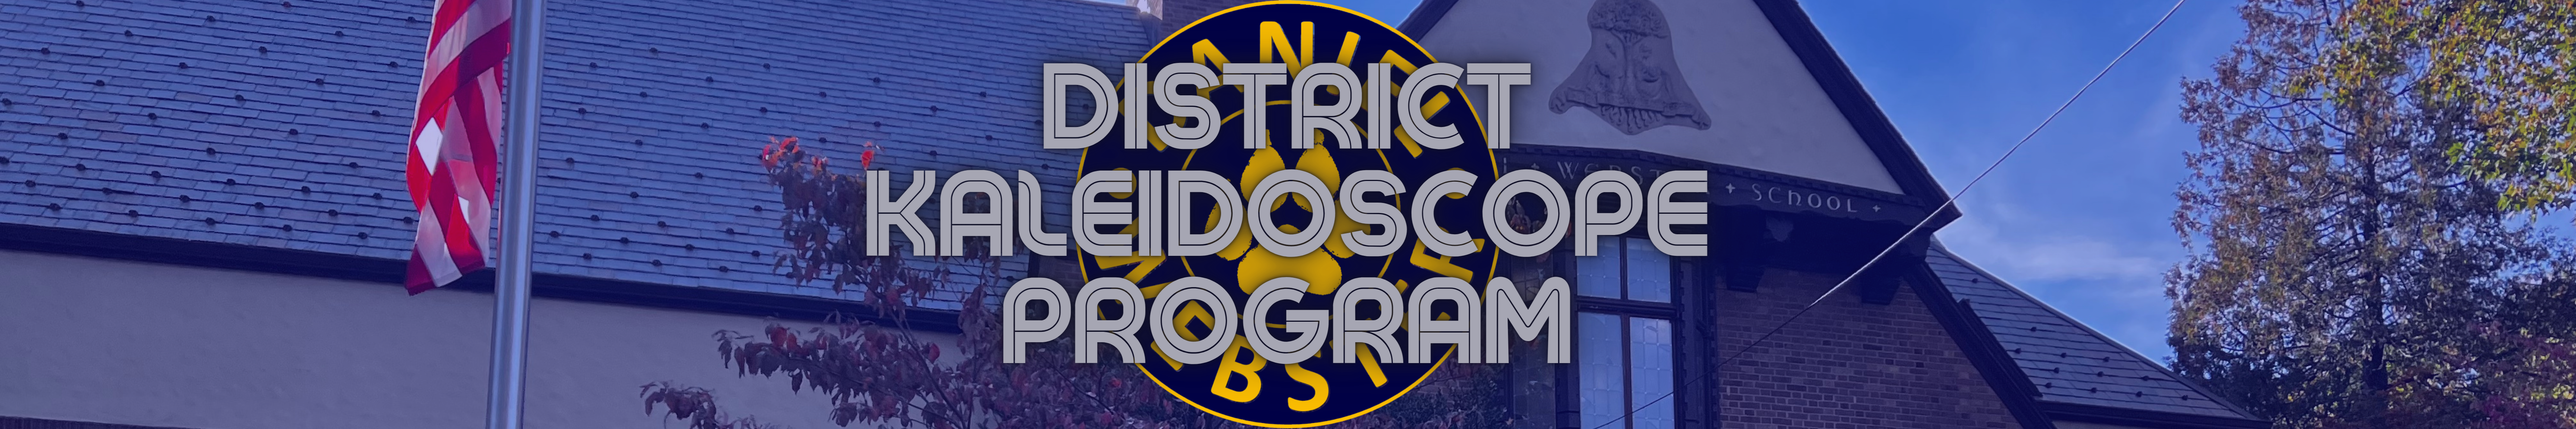 District Kaleidoscope Program banner